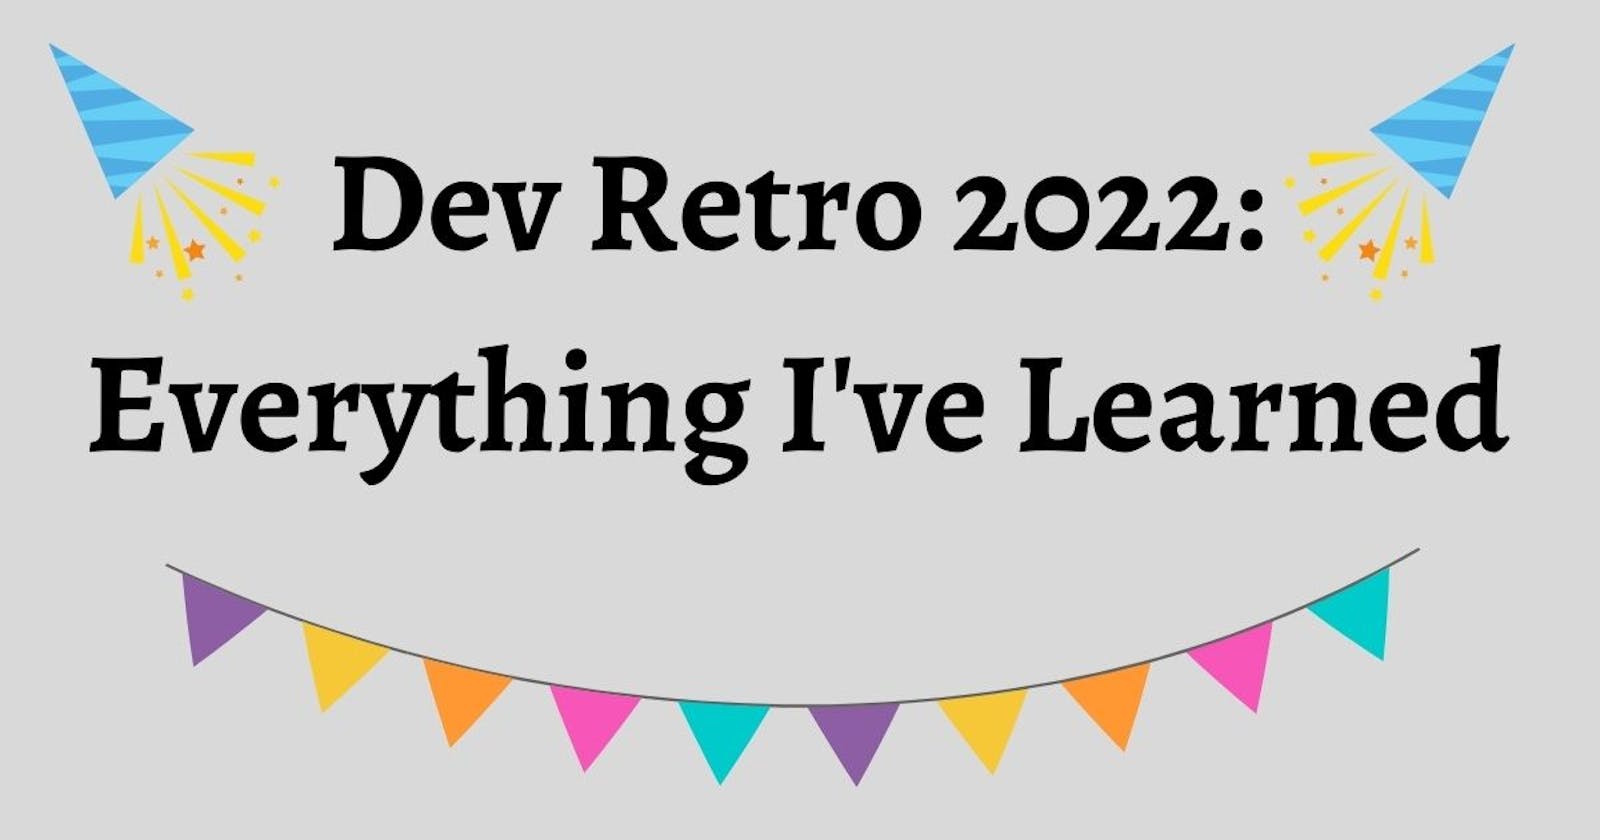 Dev Retro 2022: Everything I've Learned